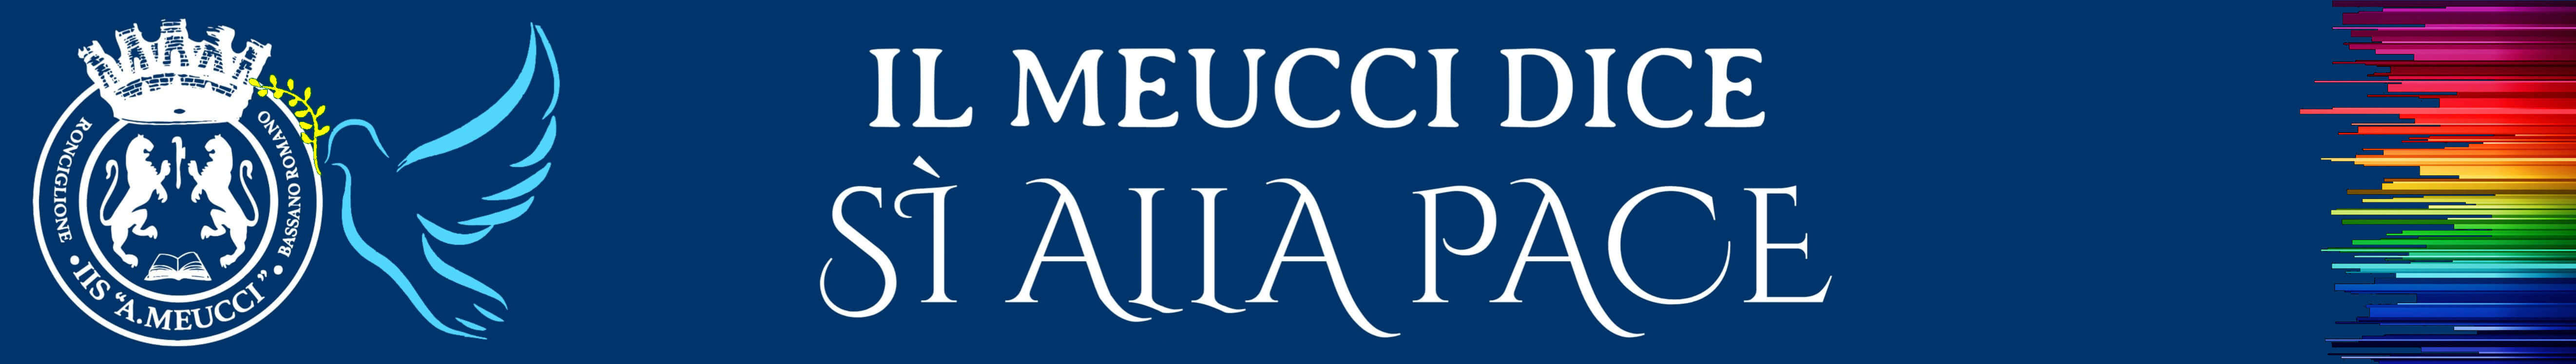 images/Logo/Logo_MeucciPace4.jpg